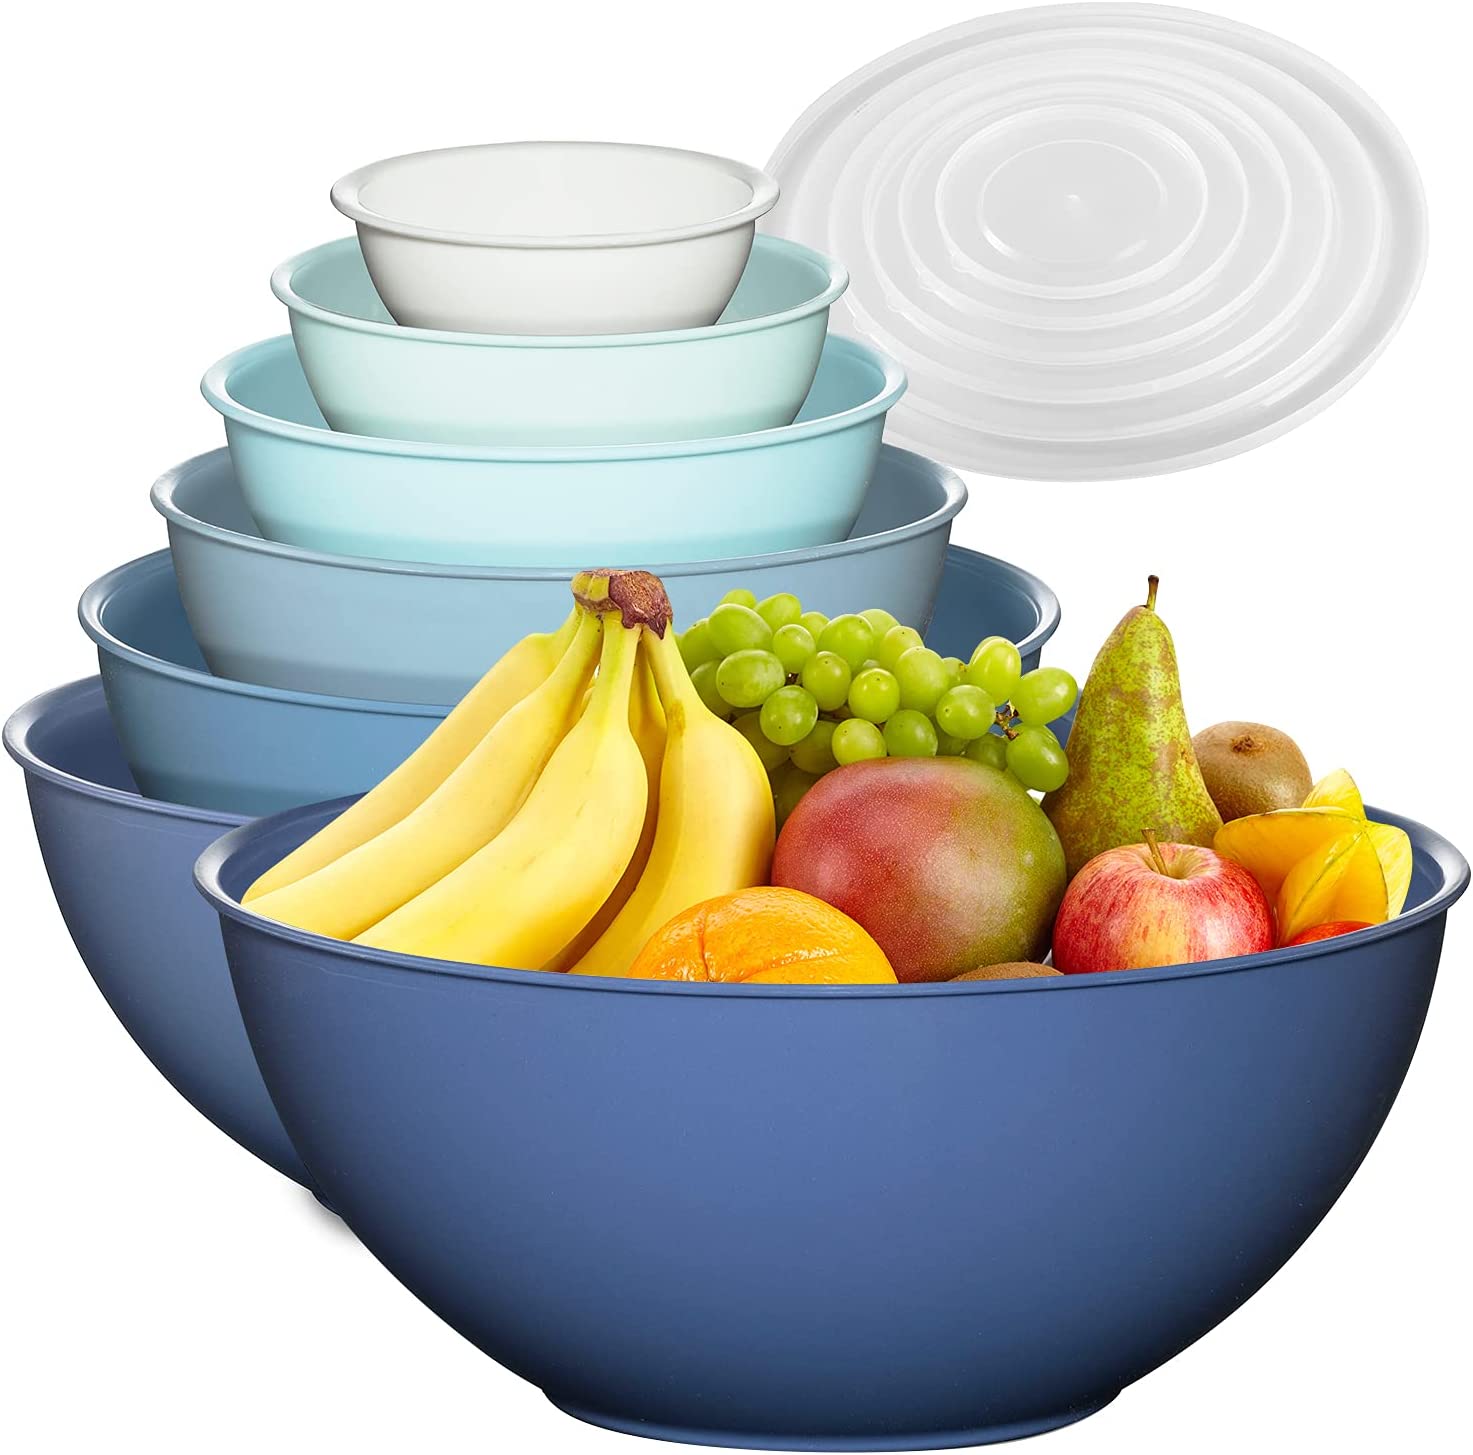 Bartnelli Dishwasher Safe Plastic Bowls With Lids, 6-Count